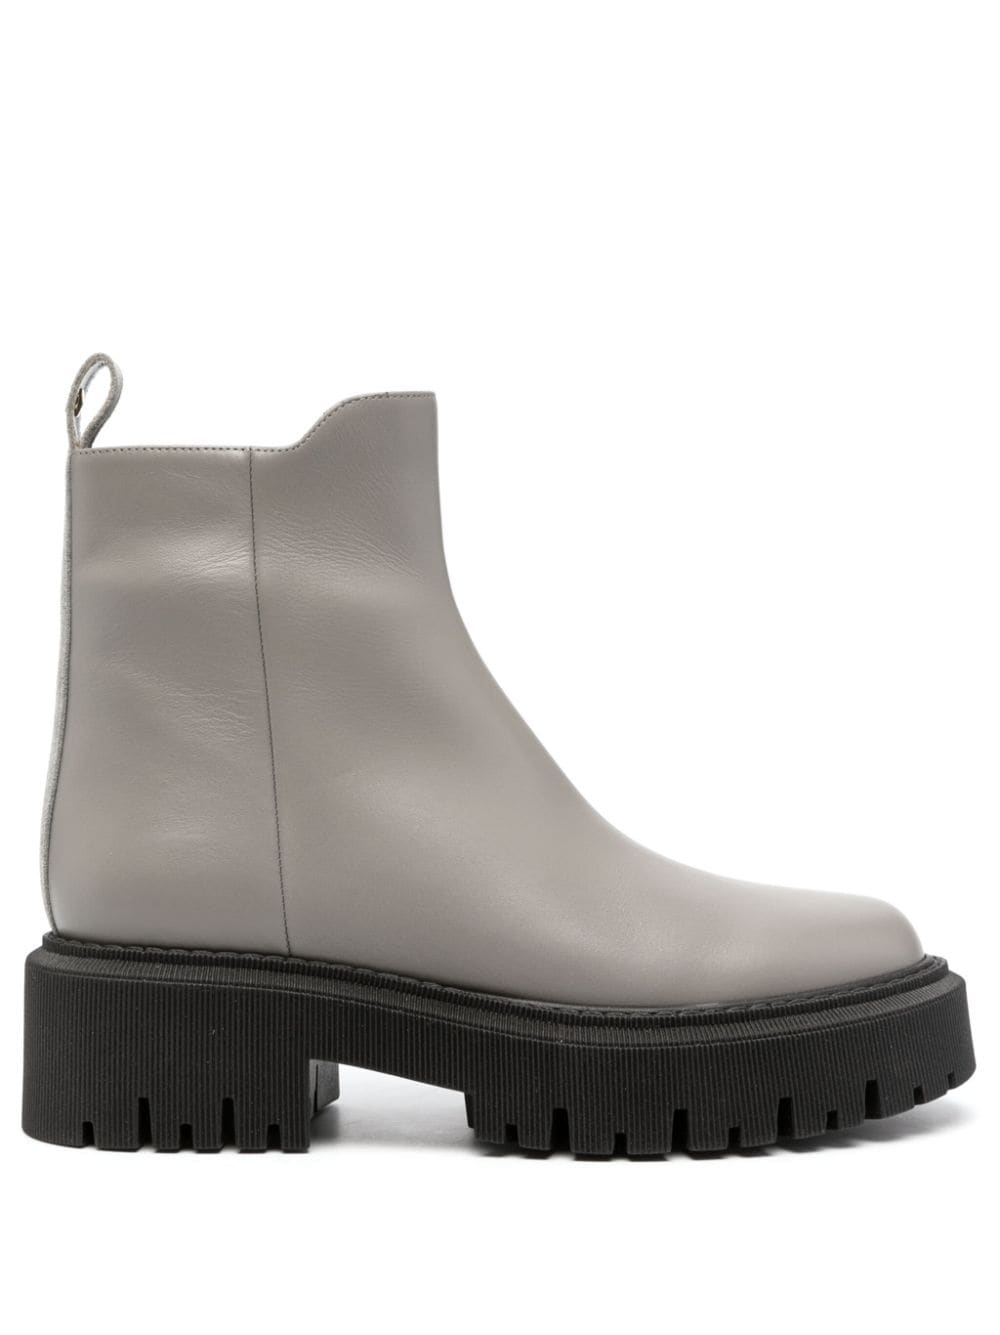 Lorena Antoniazzi 45mm leather ankle boots - Grey von Lorena Antoniazzi